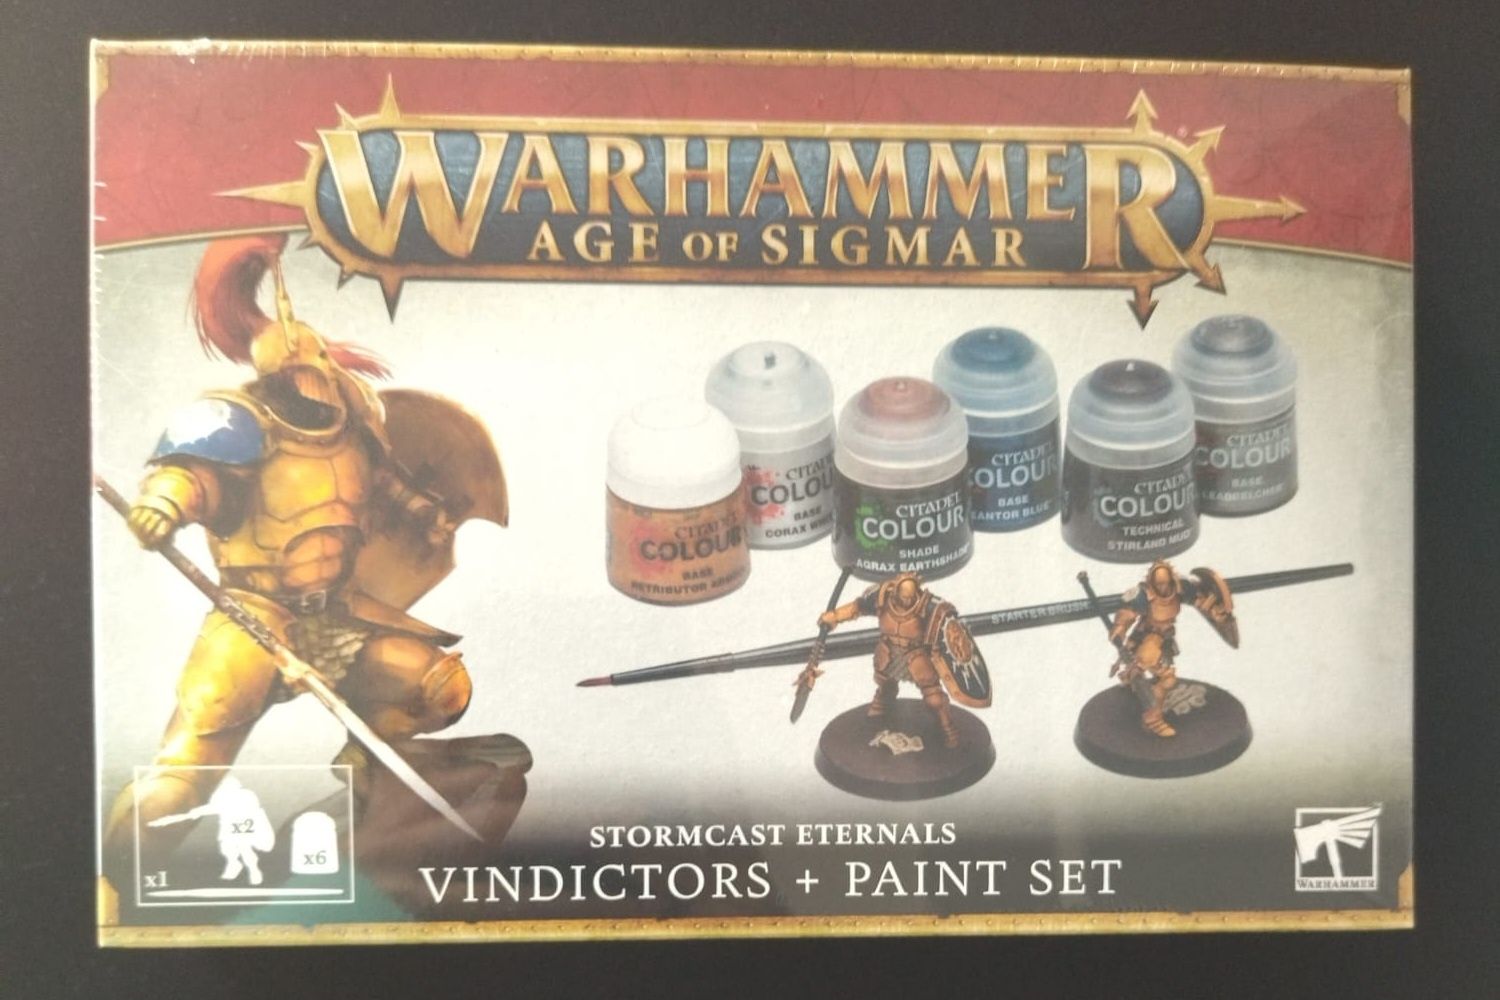 Warhammer Retail Box